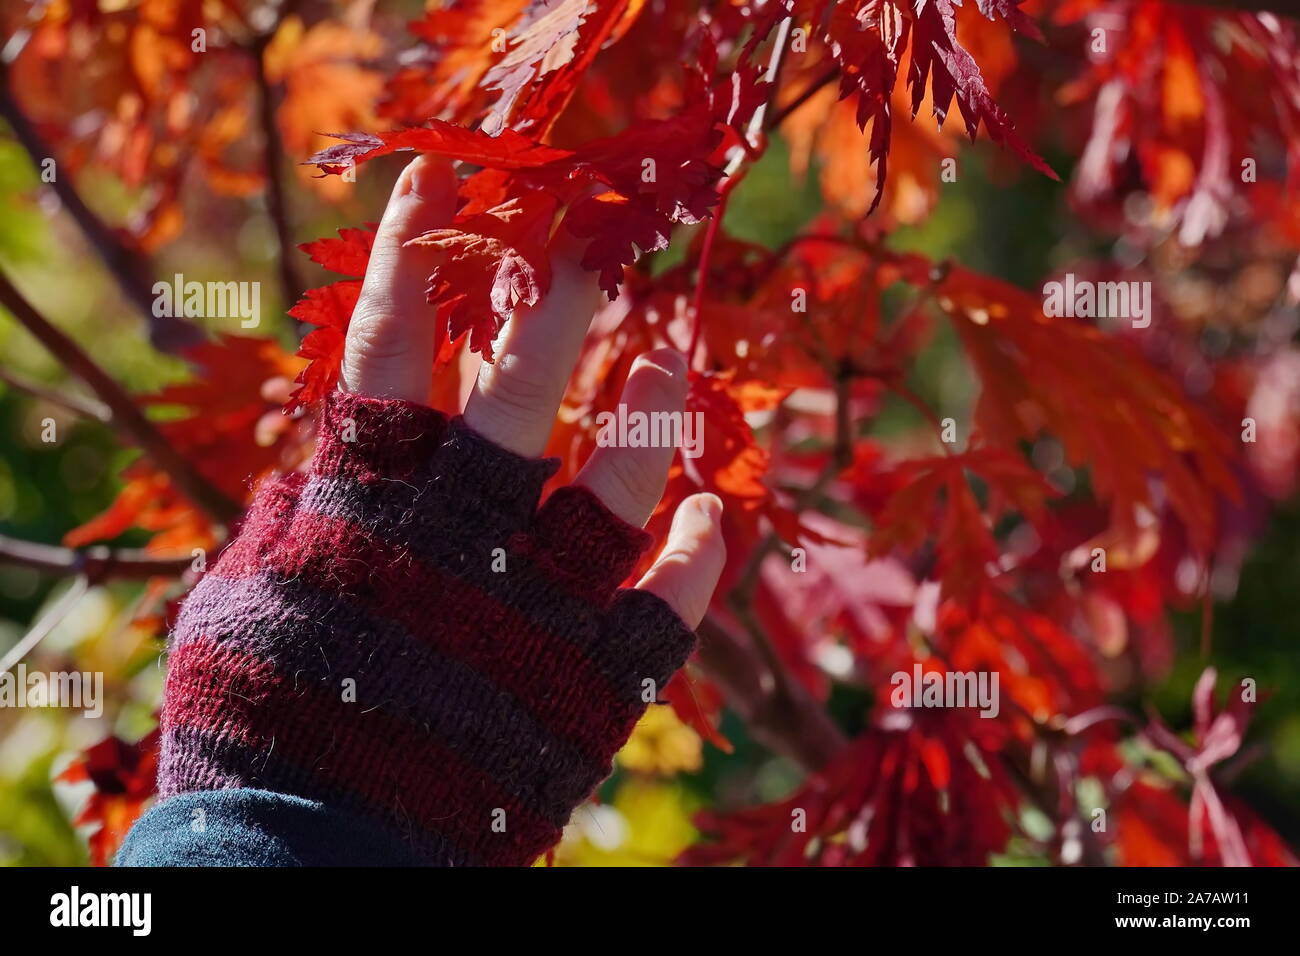 Boothbay, ME/USA - Oktober 19, 2019: Hand tragen fingerlose Handschuhe behutsam berührt die bunten Herbstfarben Stockfoto